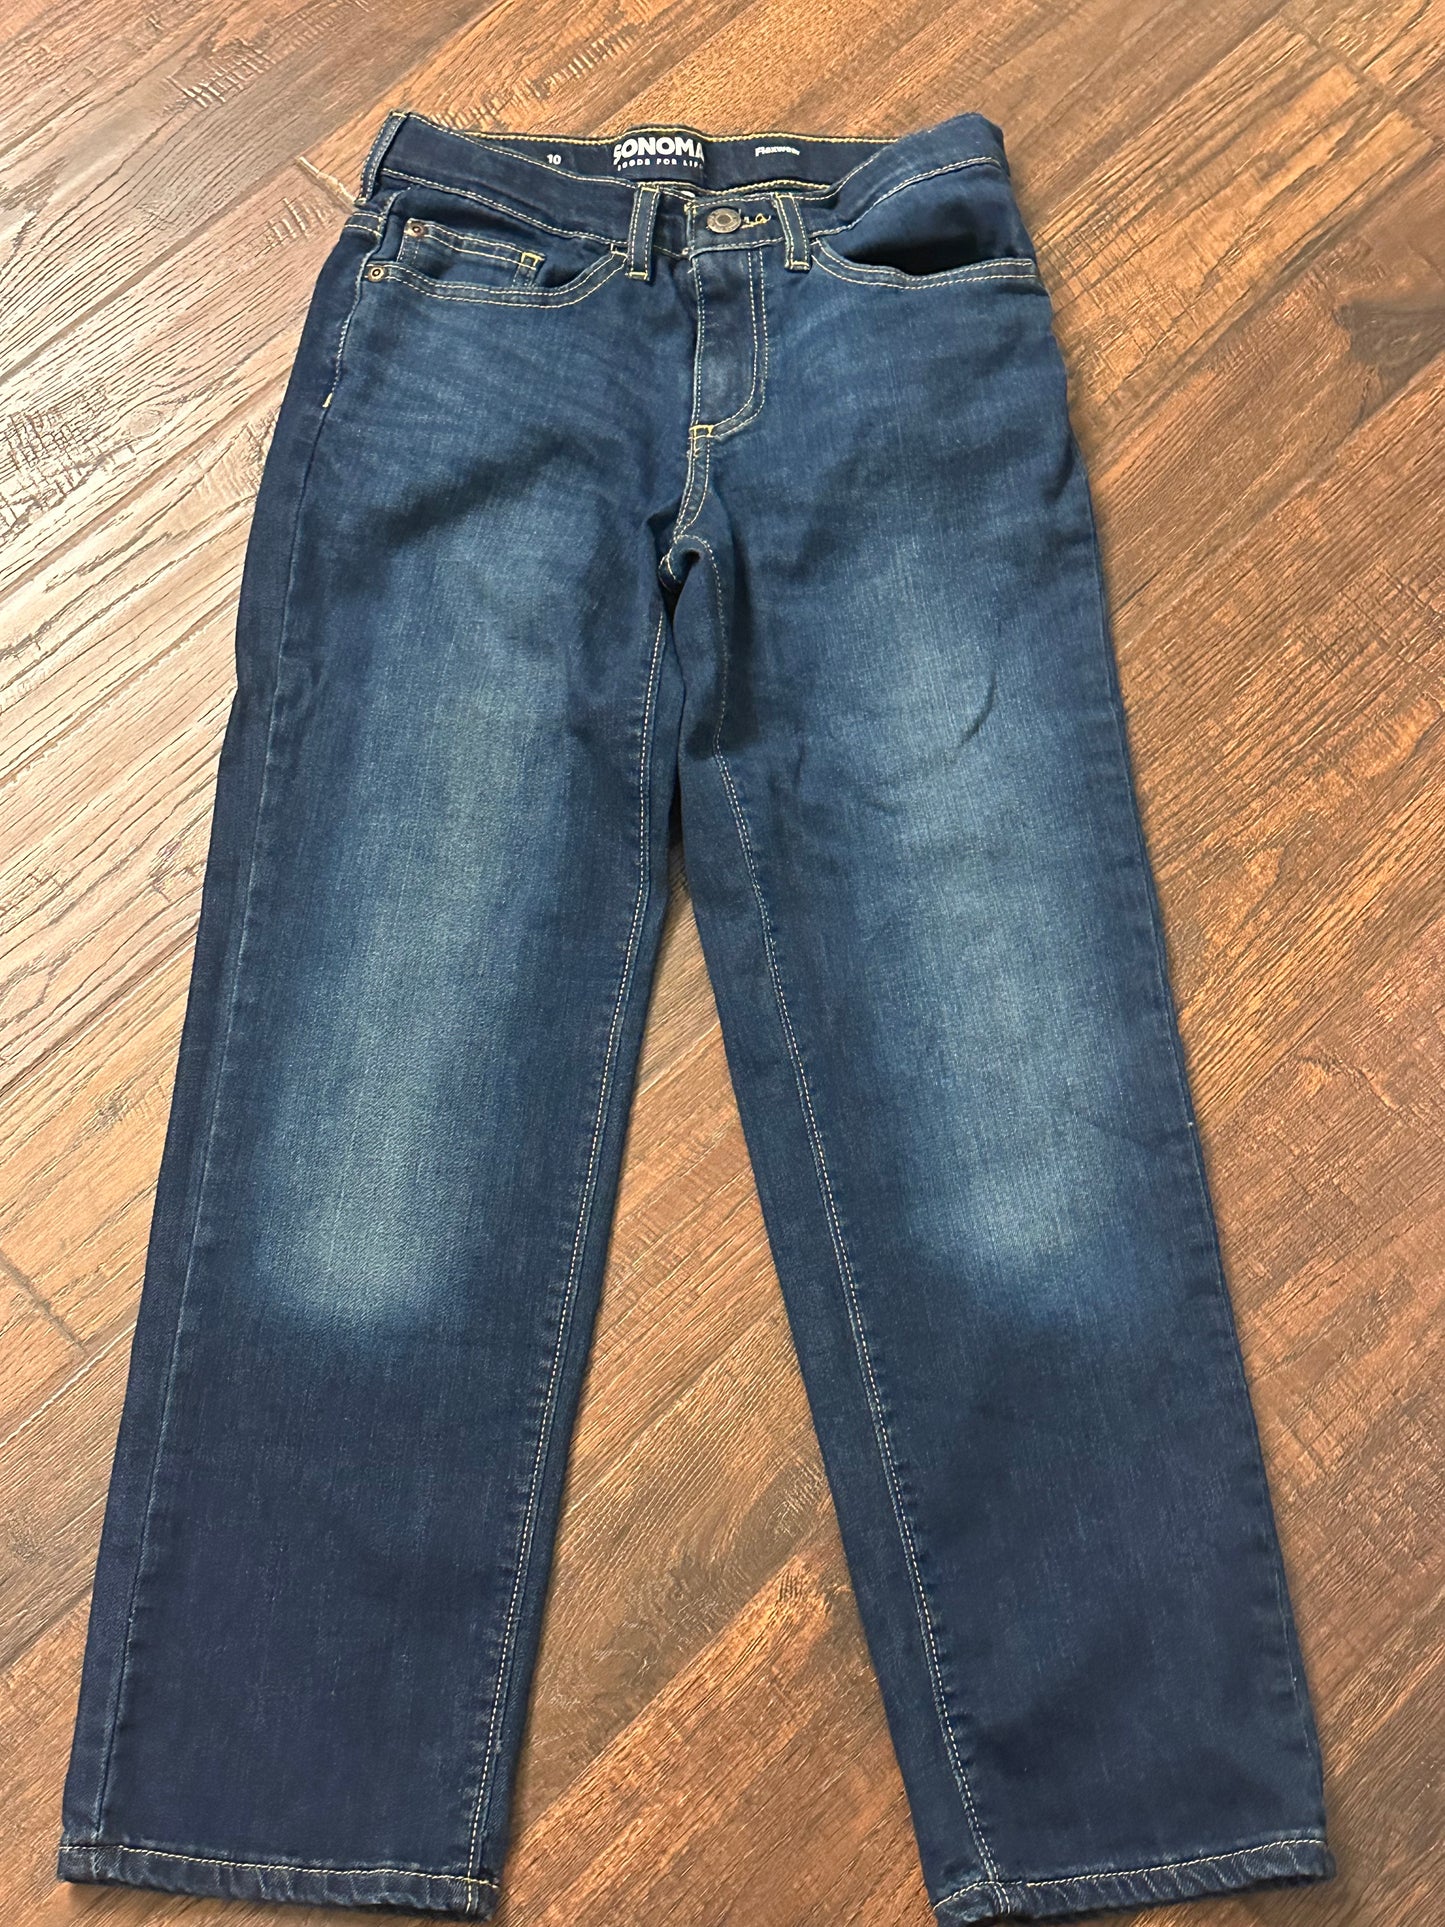 Sonoma Flexwear Adjustable Waistband Boys Jeans Size 10-Pickup in Lebanon or Blue Ash